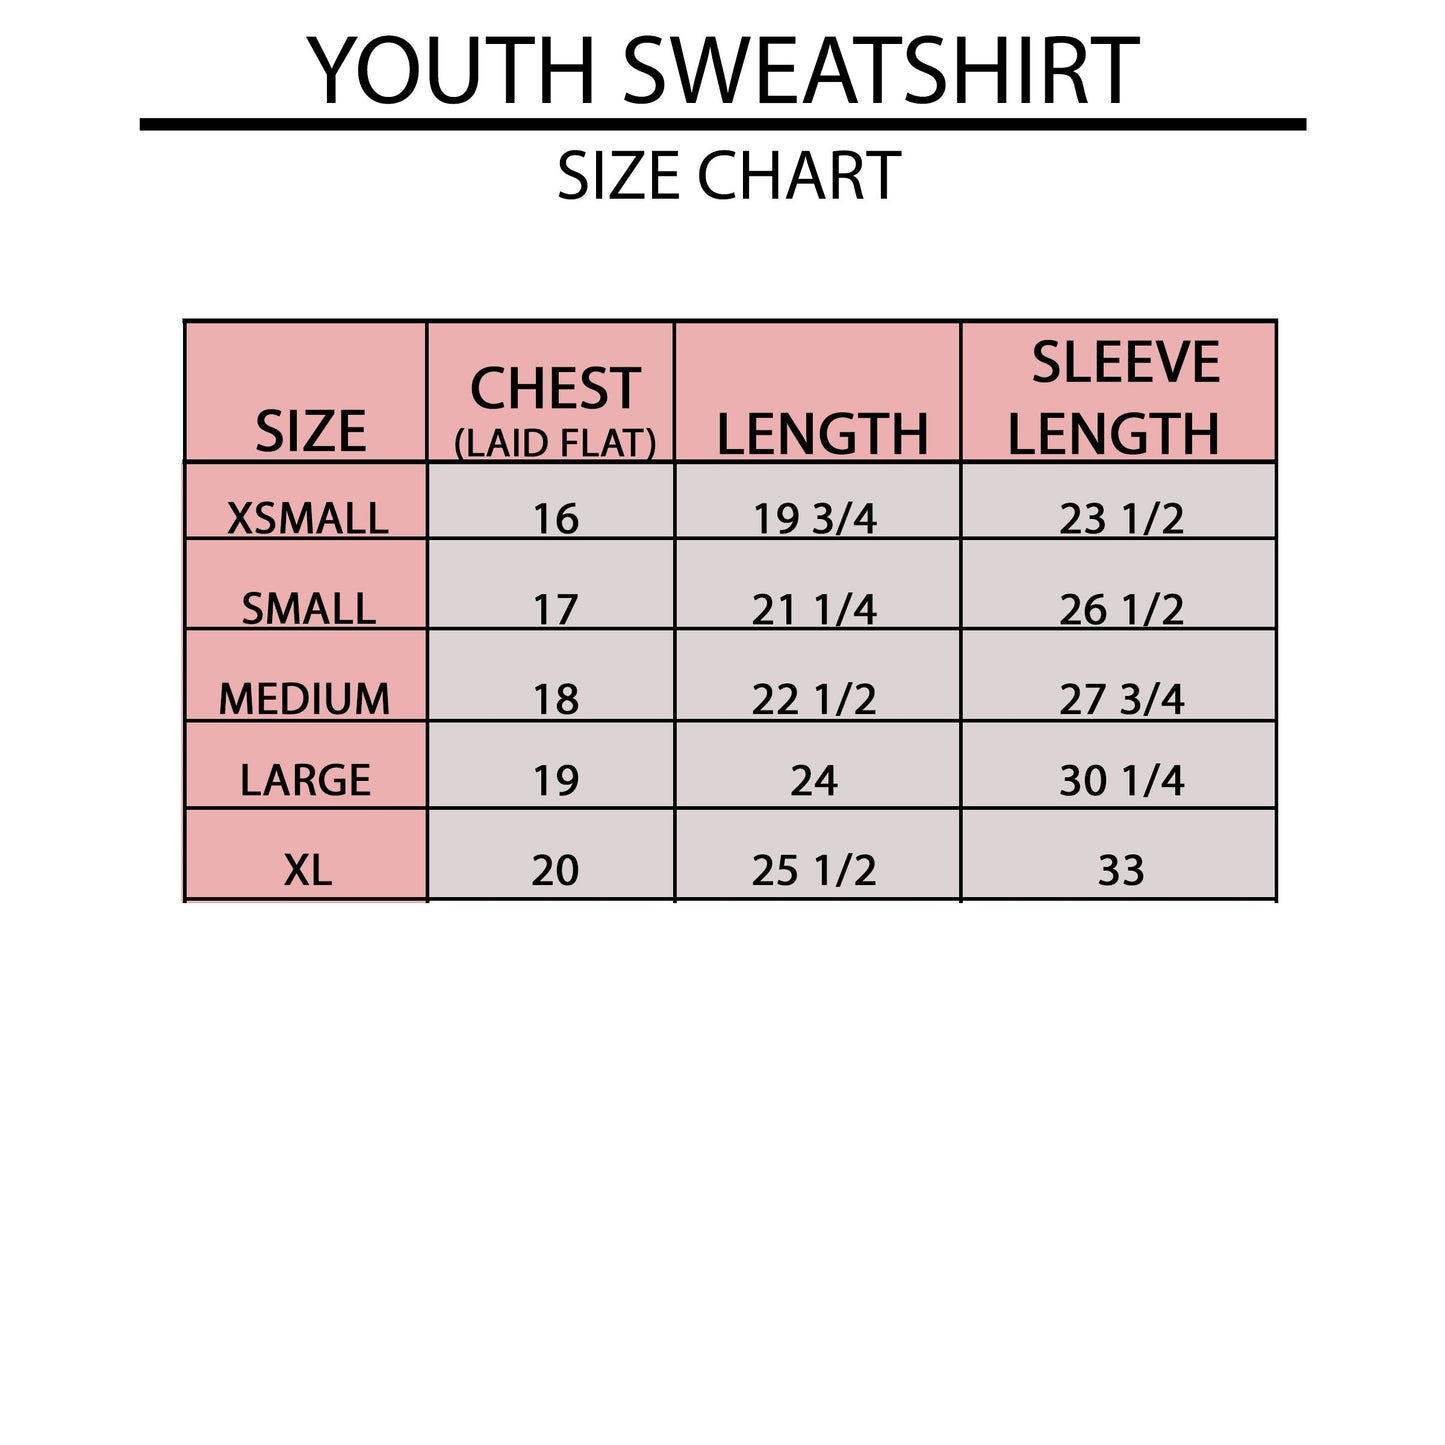 Checkered Heart Throb | Youth Sweatshirt